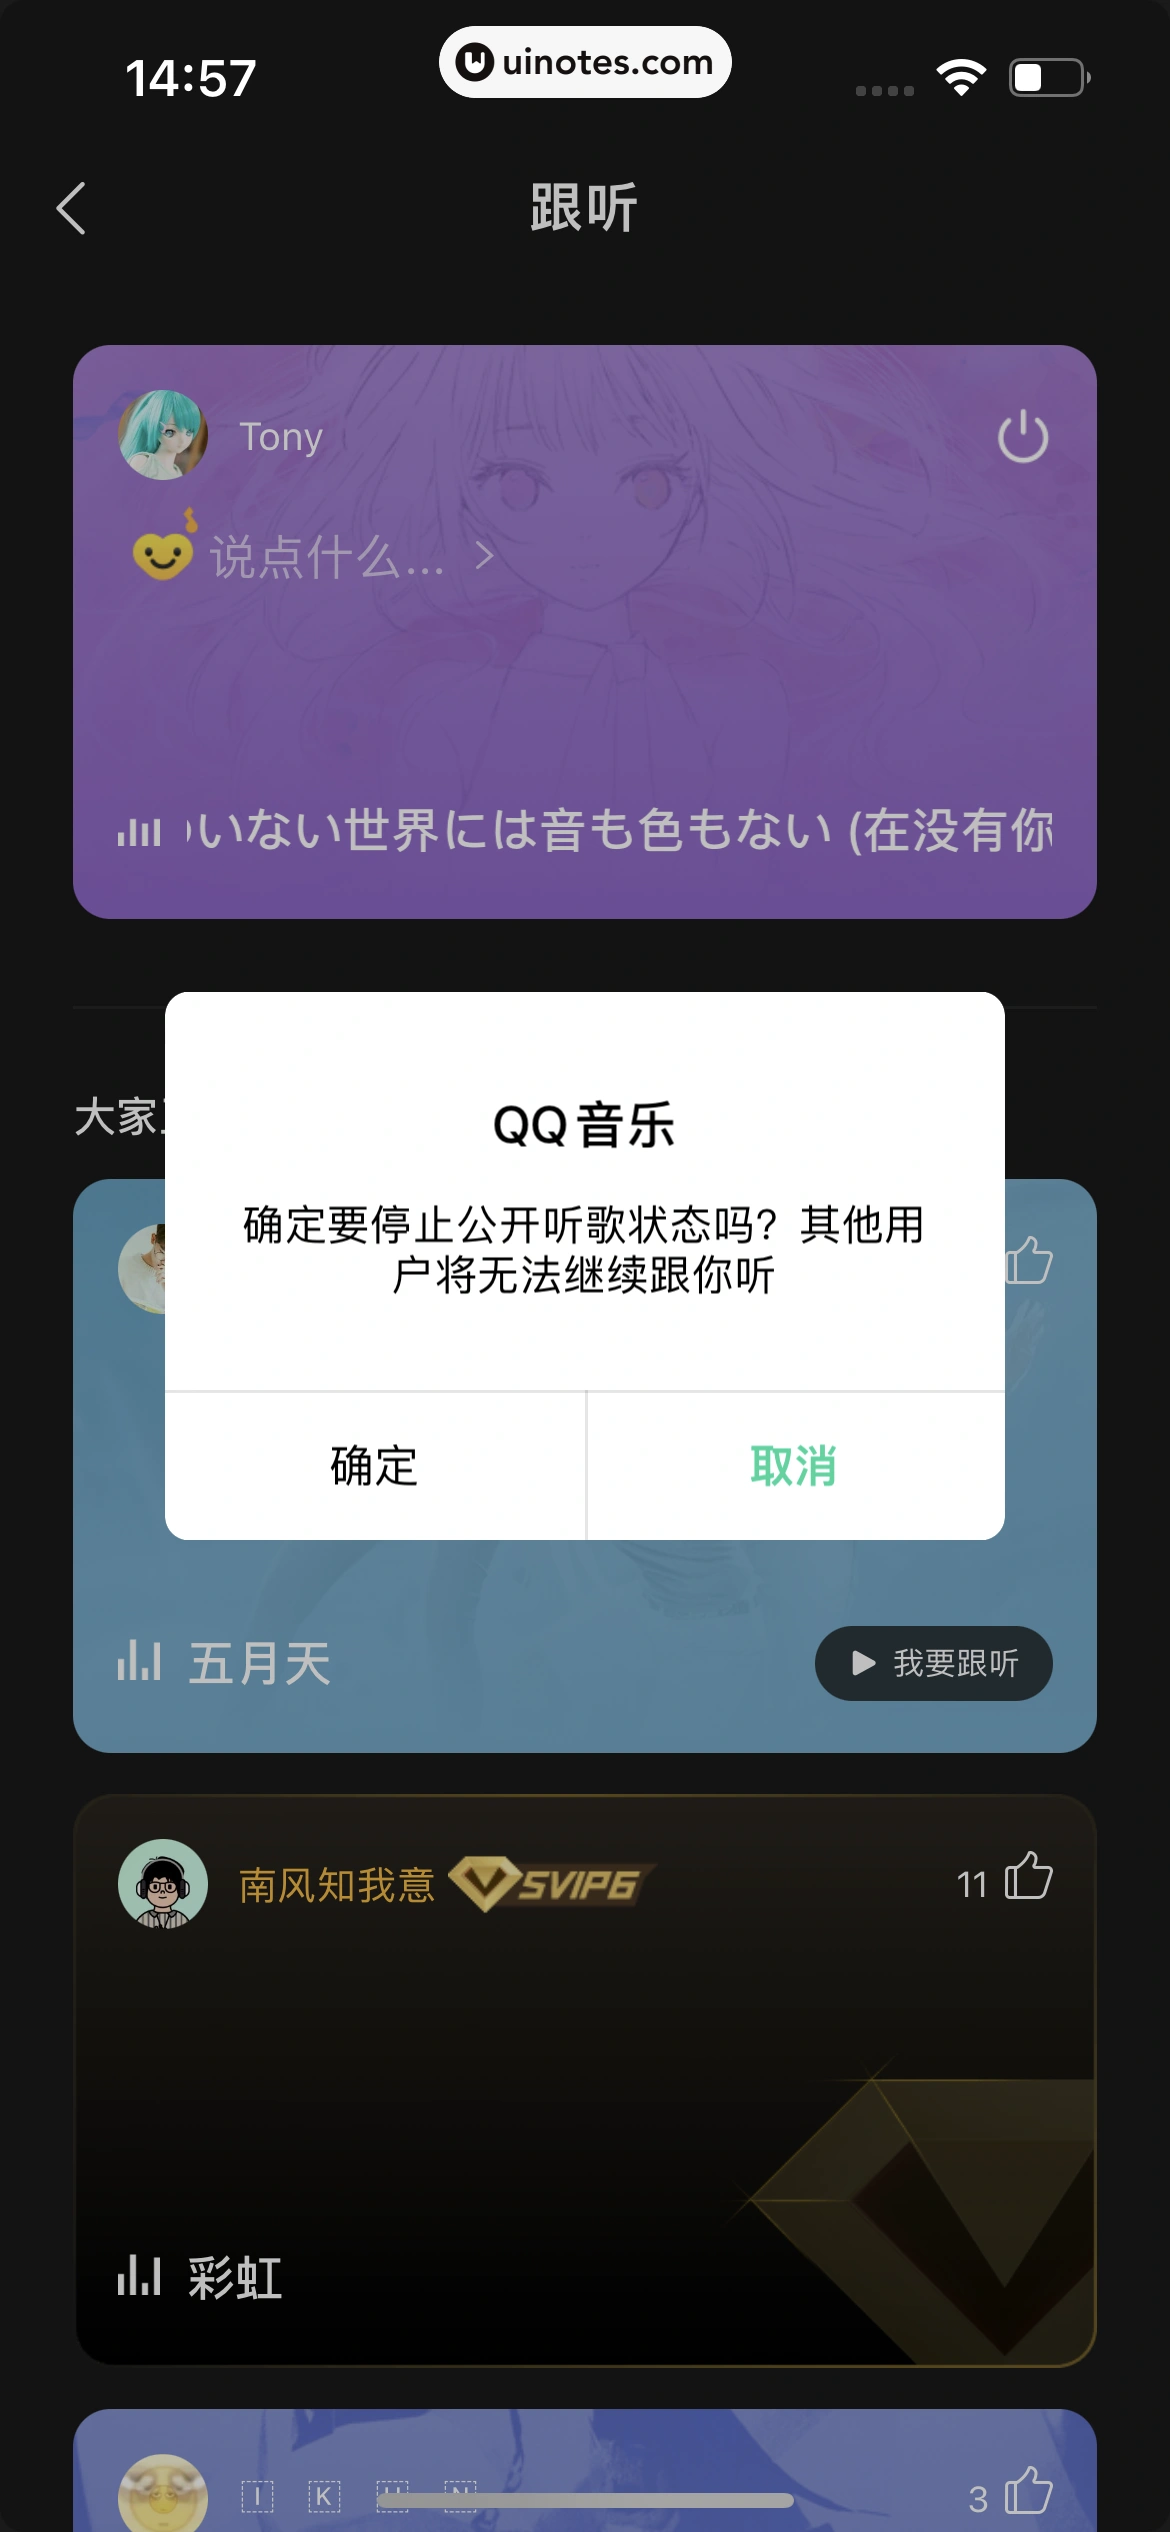 QQ音乐 App 截图 242 - UI Notes